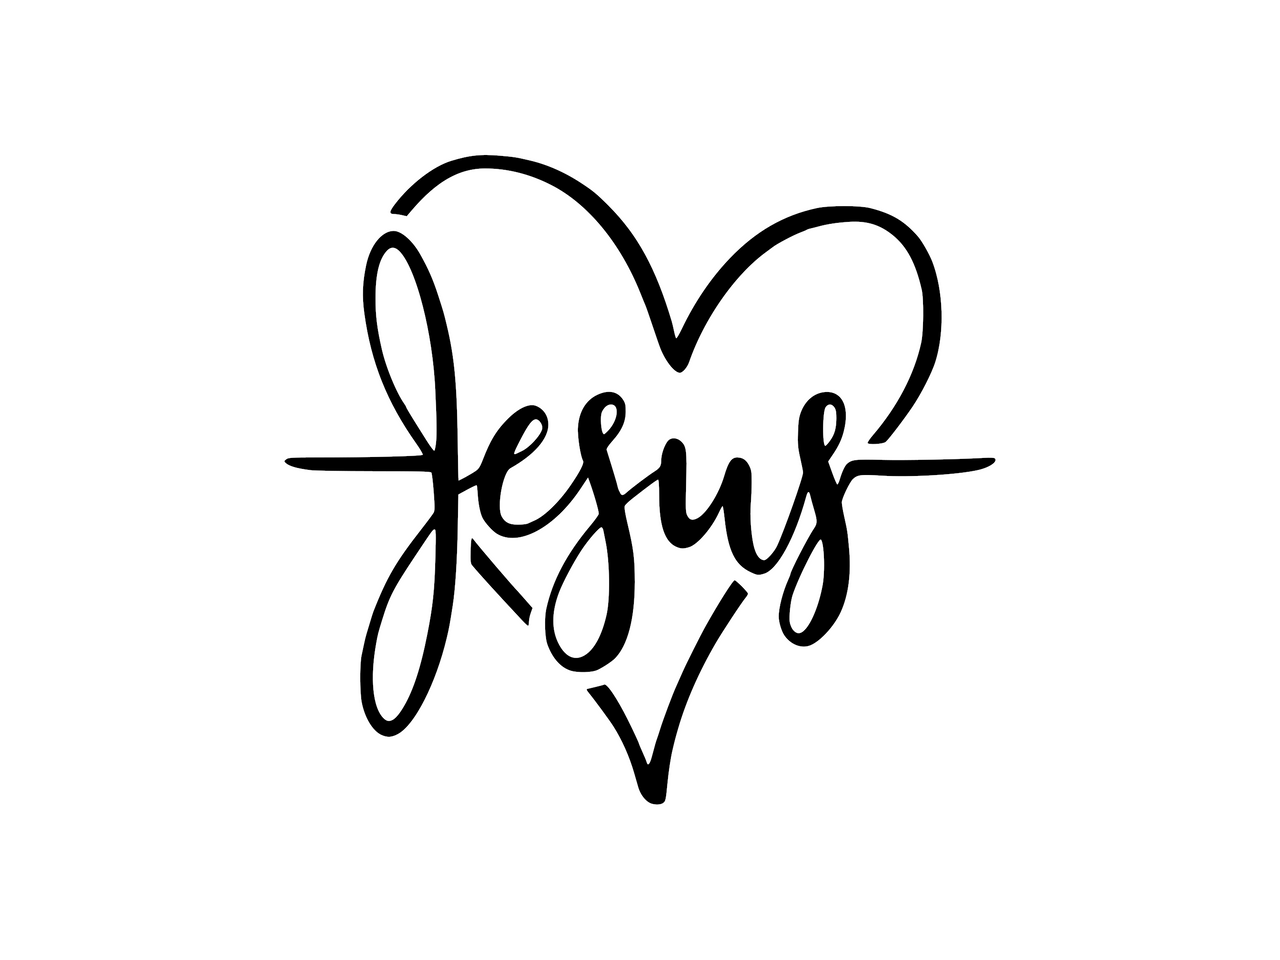 Jesus Christ Sticker Sheets – Worthy Written Words